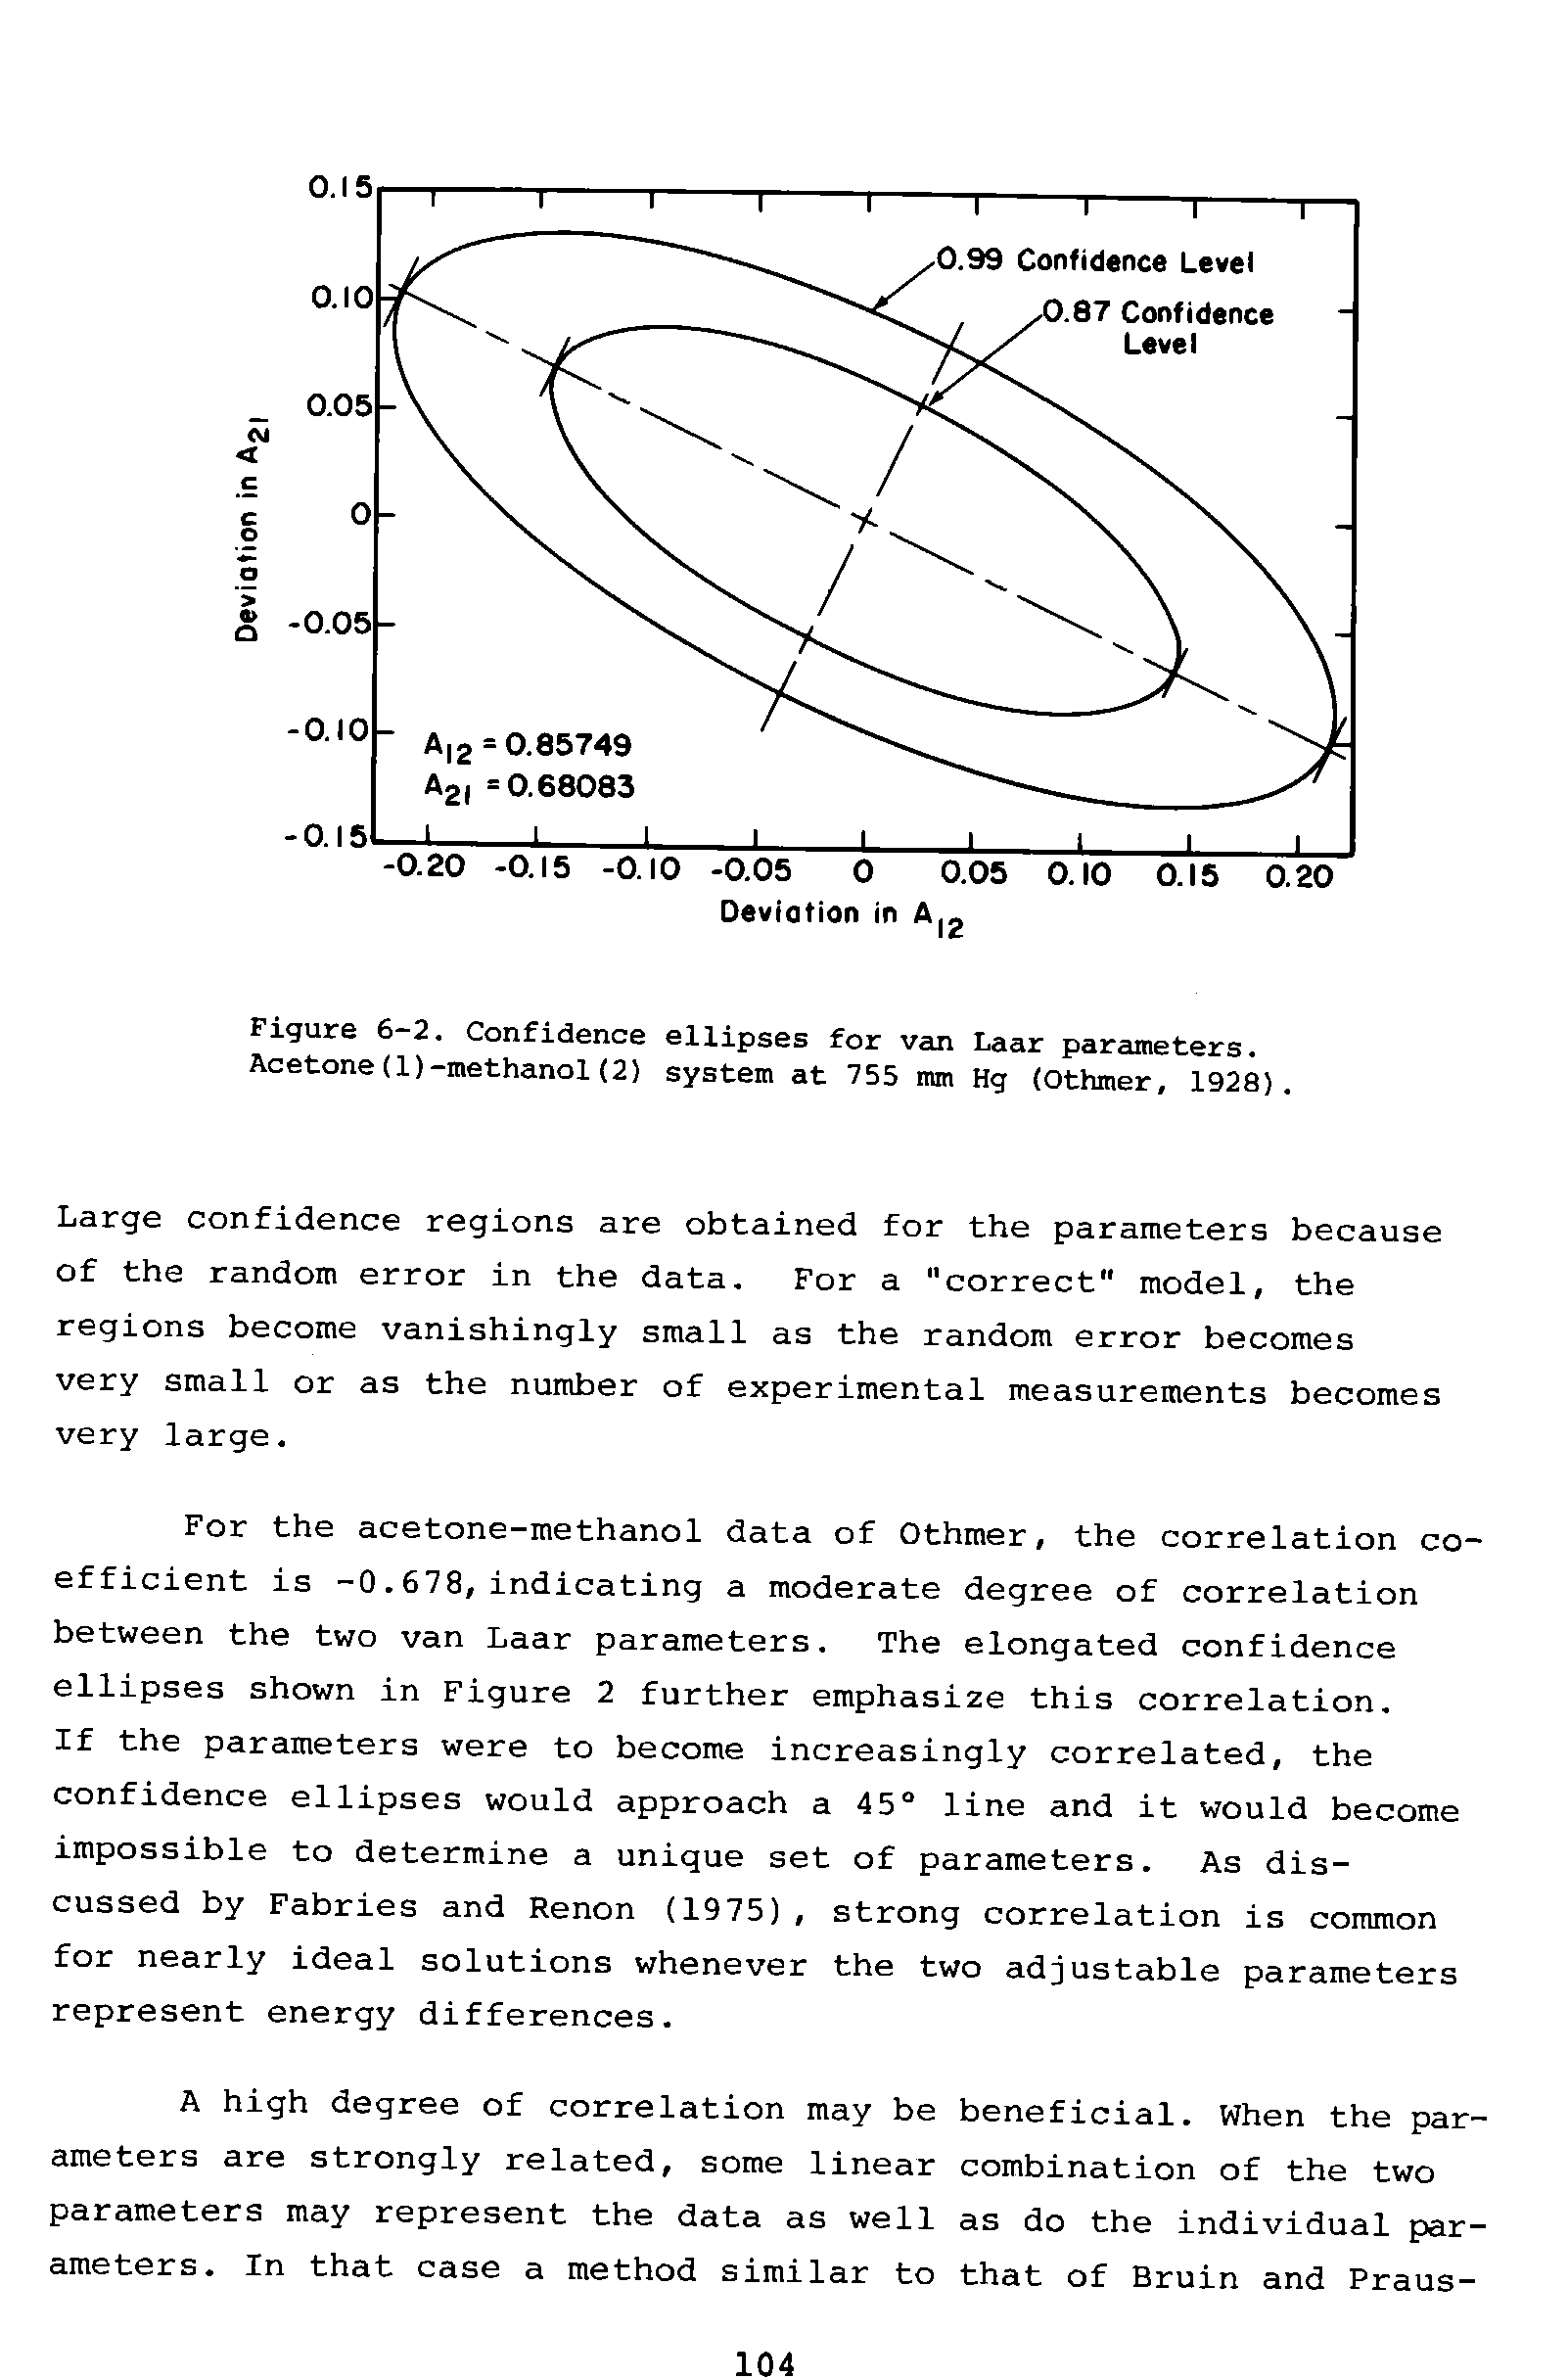 Figure 6-2. Confidence ellipses for van Laar parameters. Acetone(l)-methanol(2) system at 755 mm Hg (Othmer, 1928).